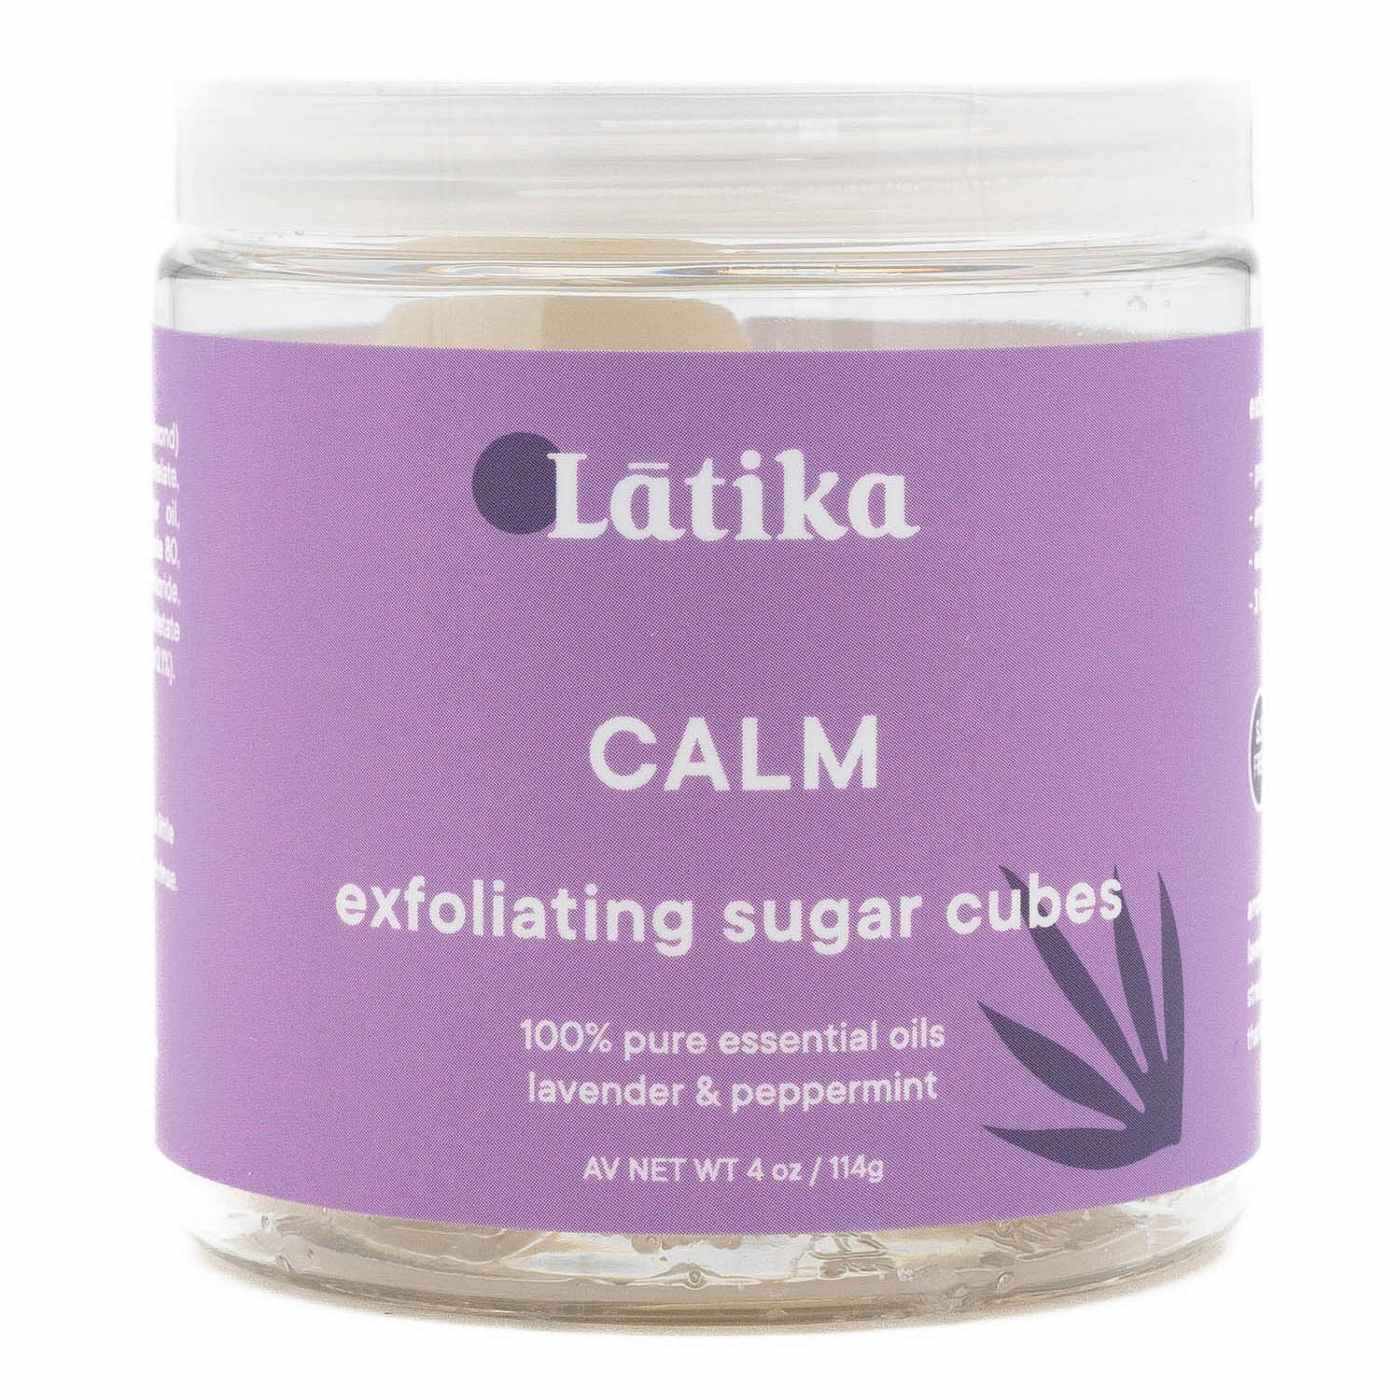 Latika Body Essentials Sugar Cubes Calm with Pure Essential Oils; image 1 of 4